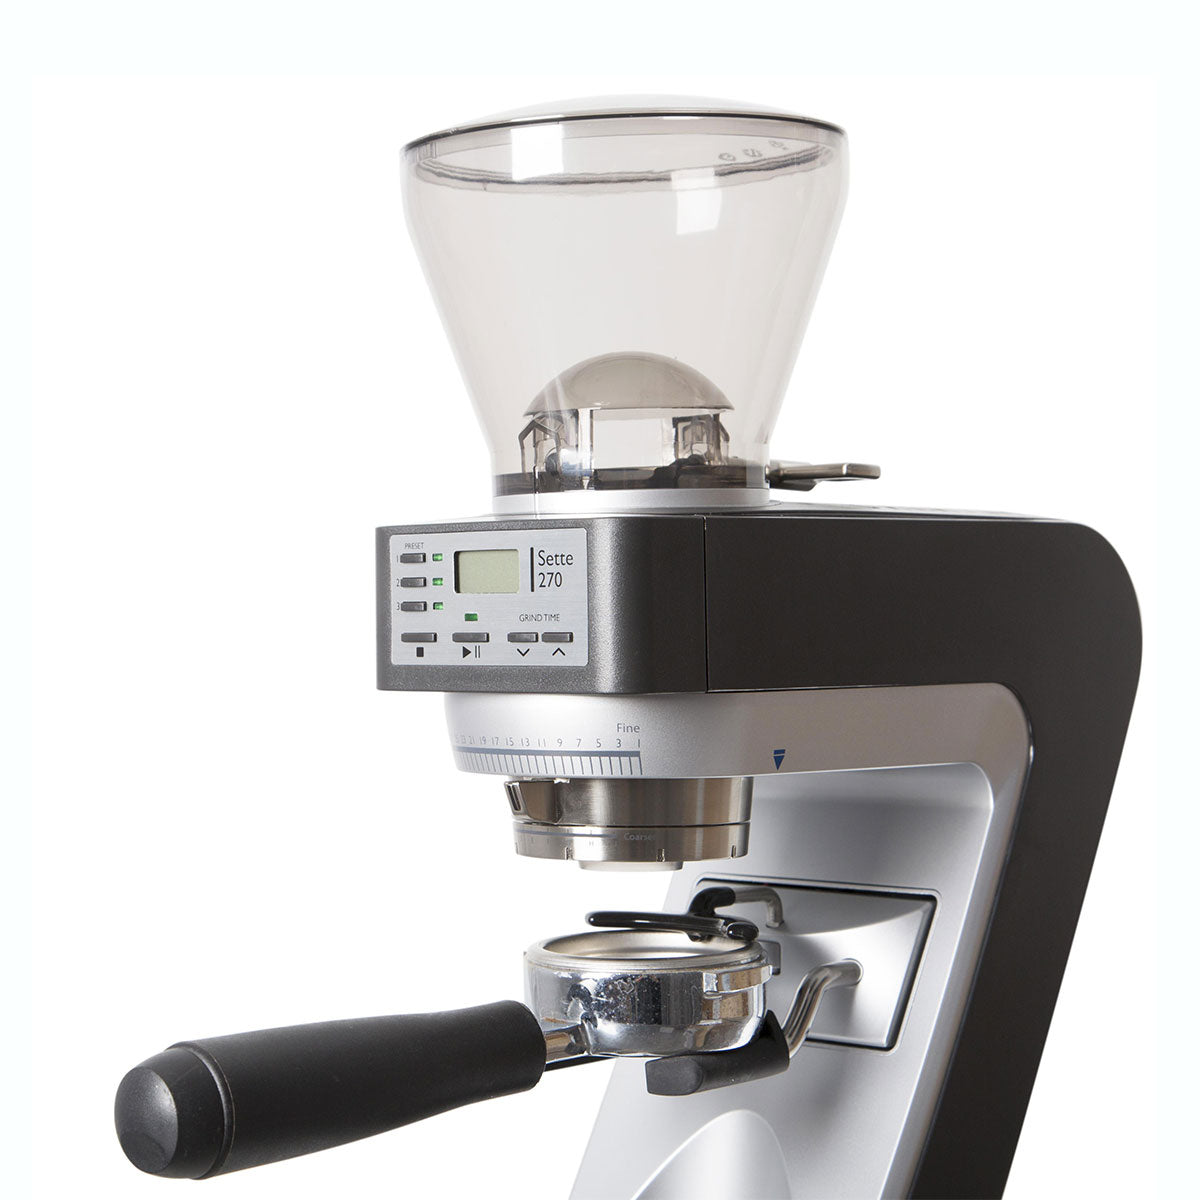 Baratza Sette 270 Conical Burr Coffee Grinder Coffee Grinder Professional Espresso Equipment 